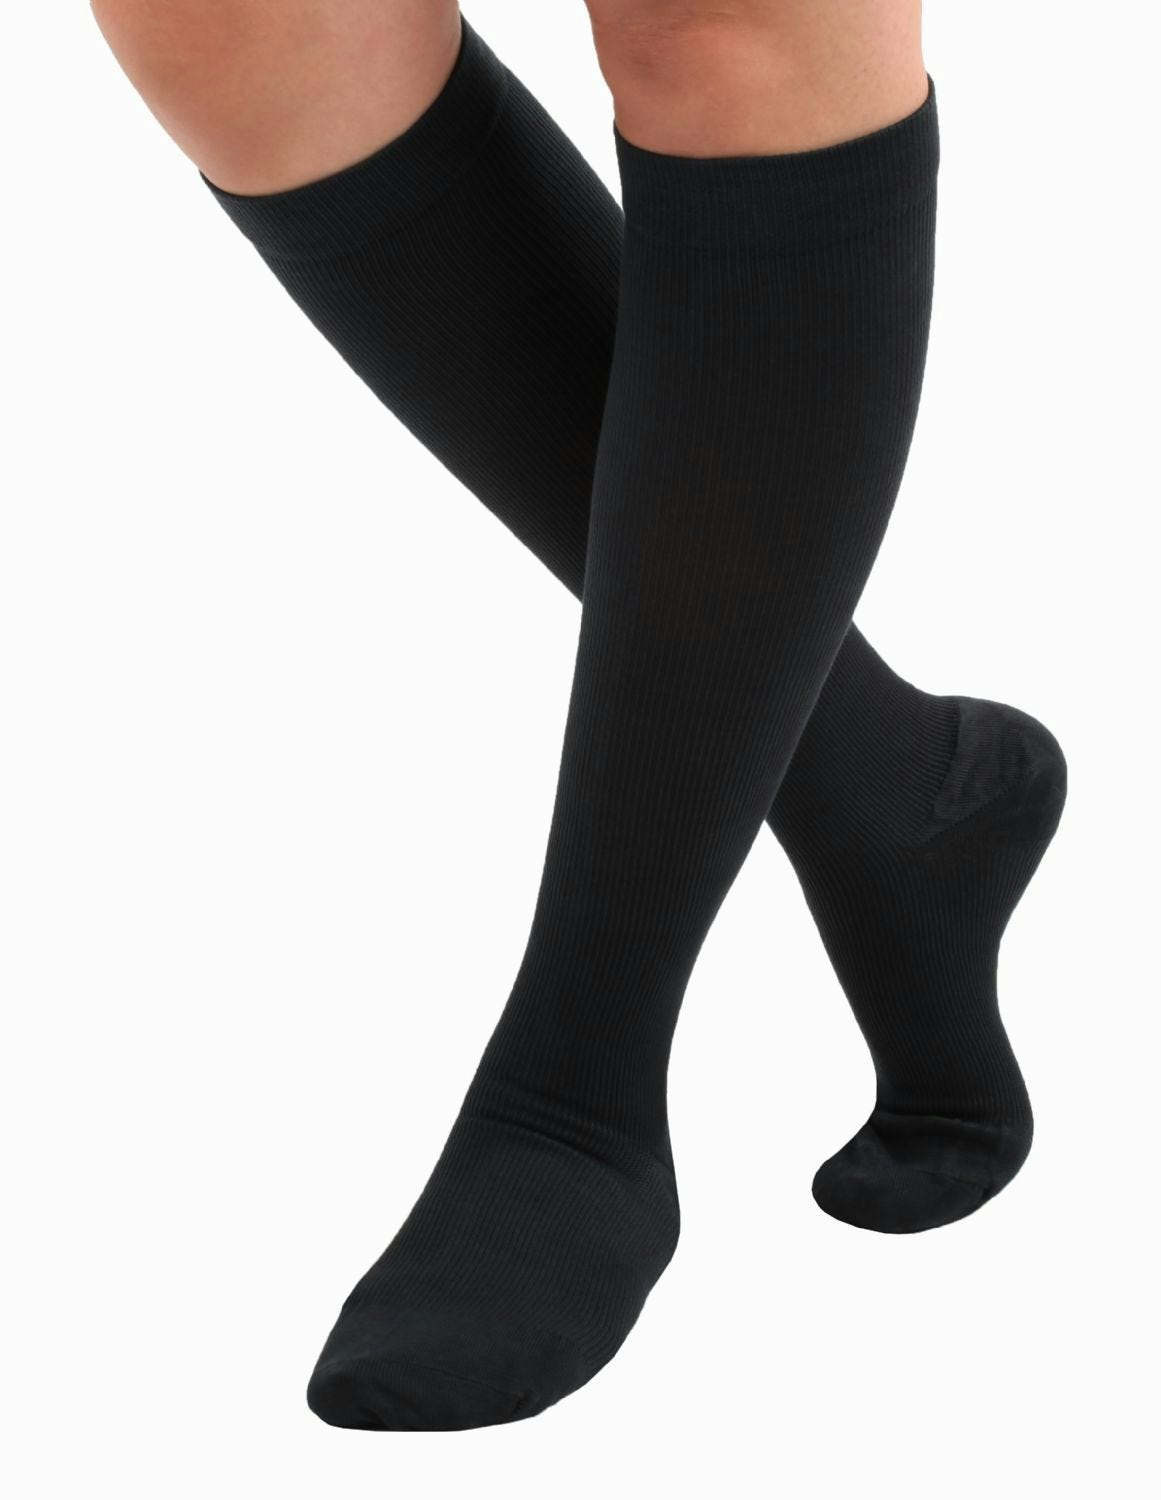 Go2 Elite Compression Socks Stockings 15-20 mmhg Graduated Sock Stocking 